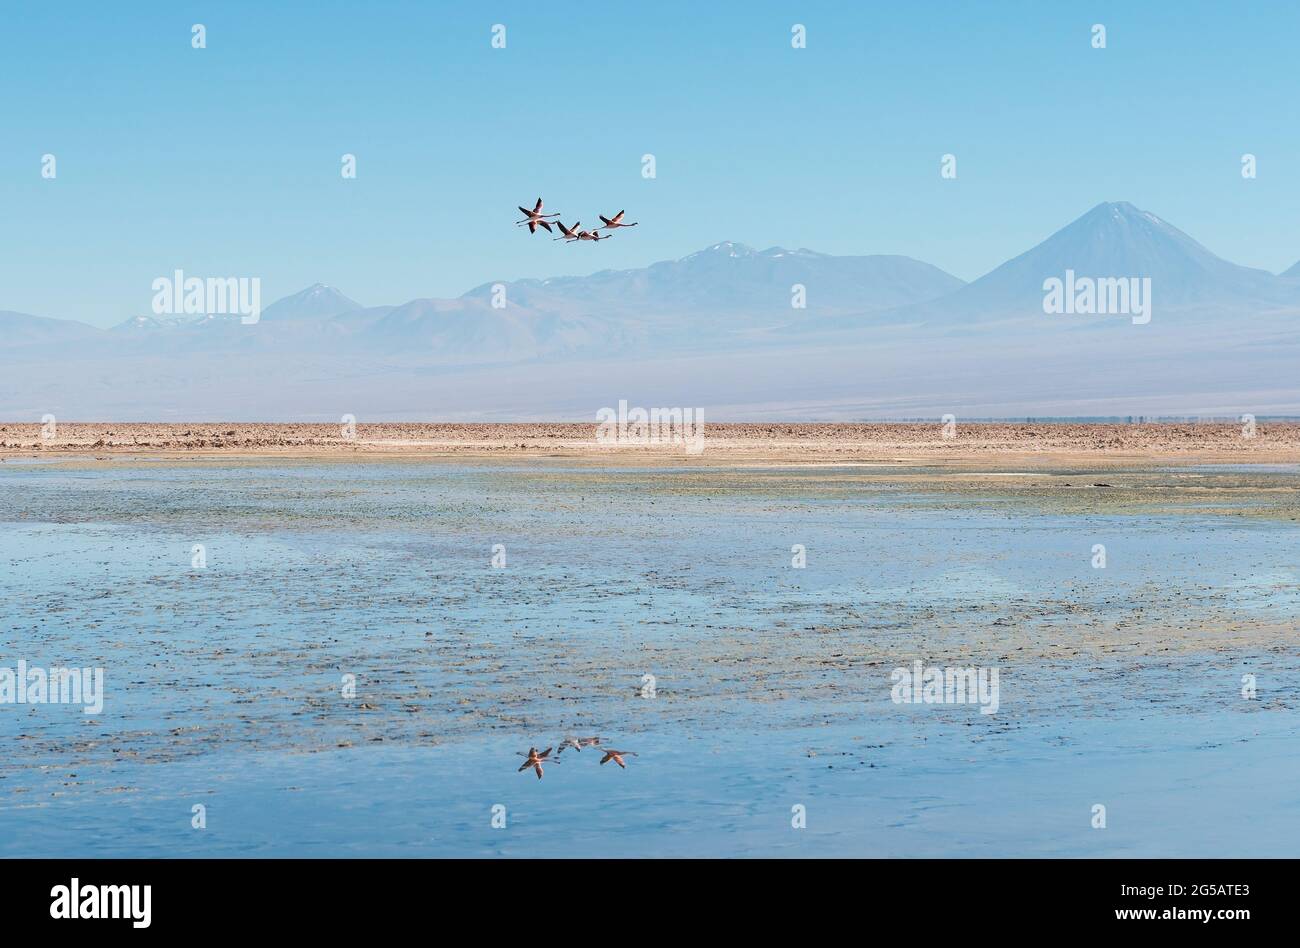 James Flamingo (Phoenicoparrus jamesi) flock flying above the Atacama salt flat, Atacama desert, Chile. Stock Photo